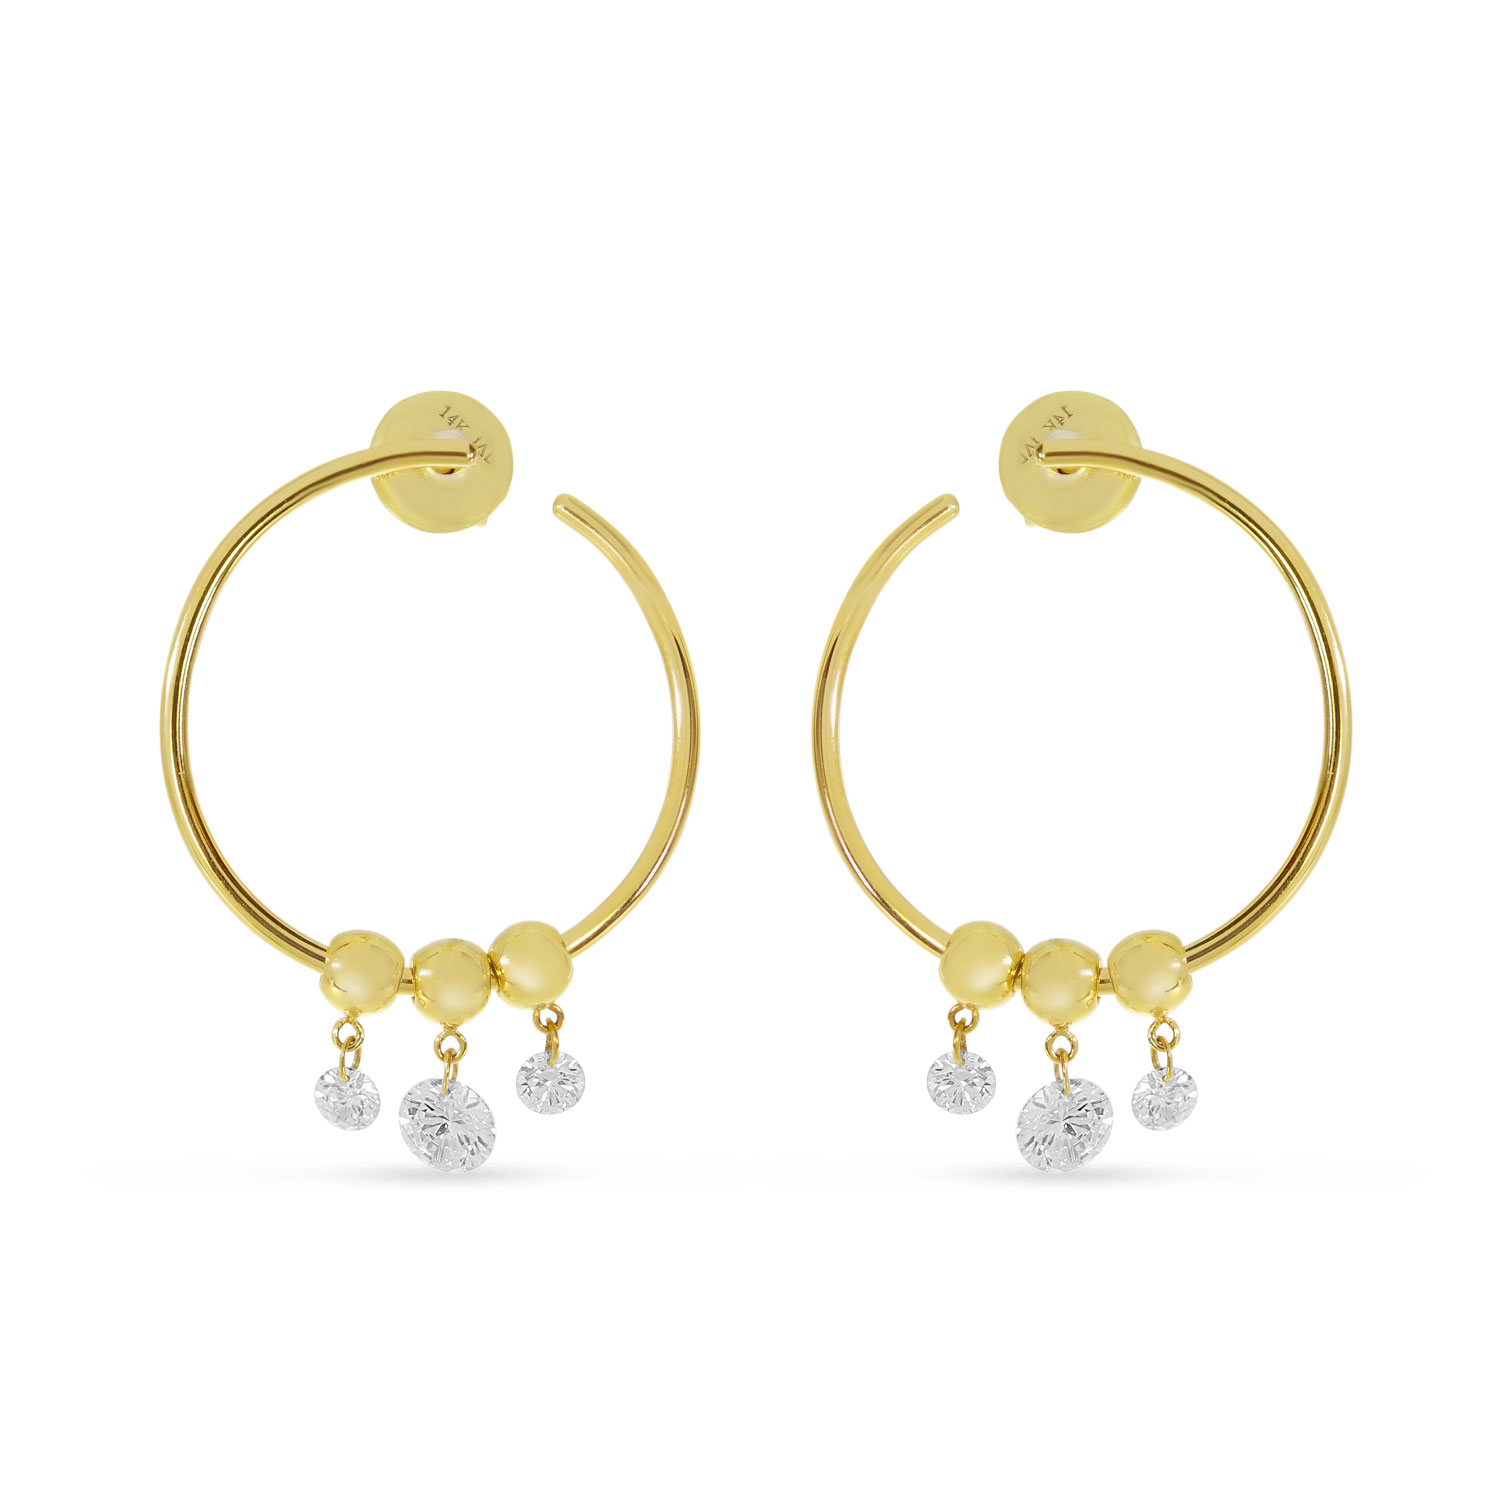 14K Yellow Gold Dashing Diamond Circle Hoop Earrings